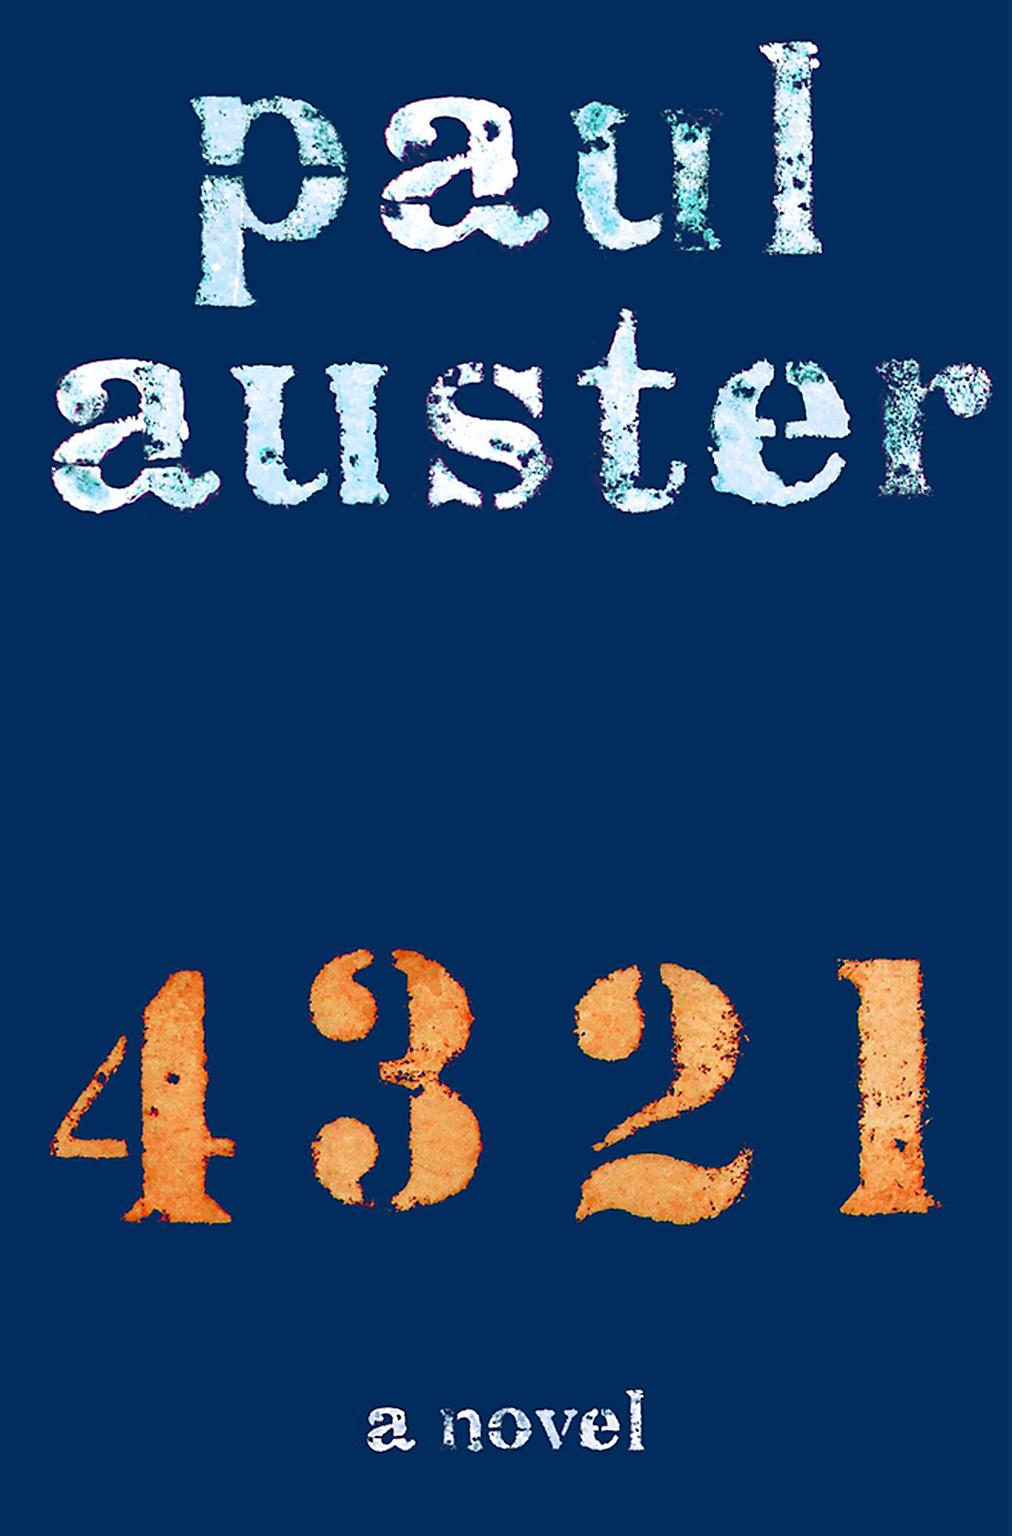 auster 4 3 2 1